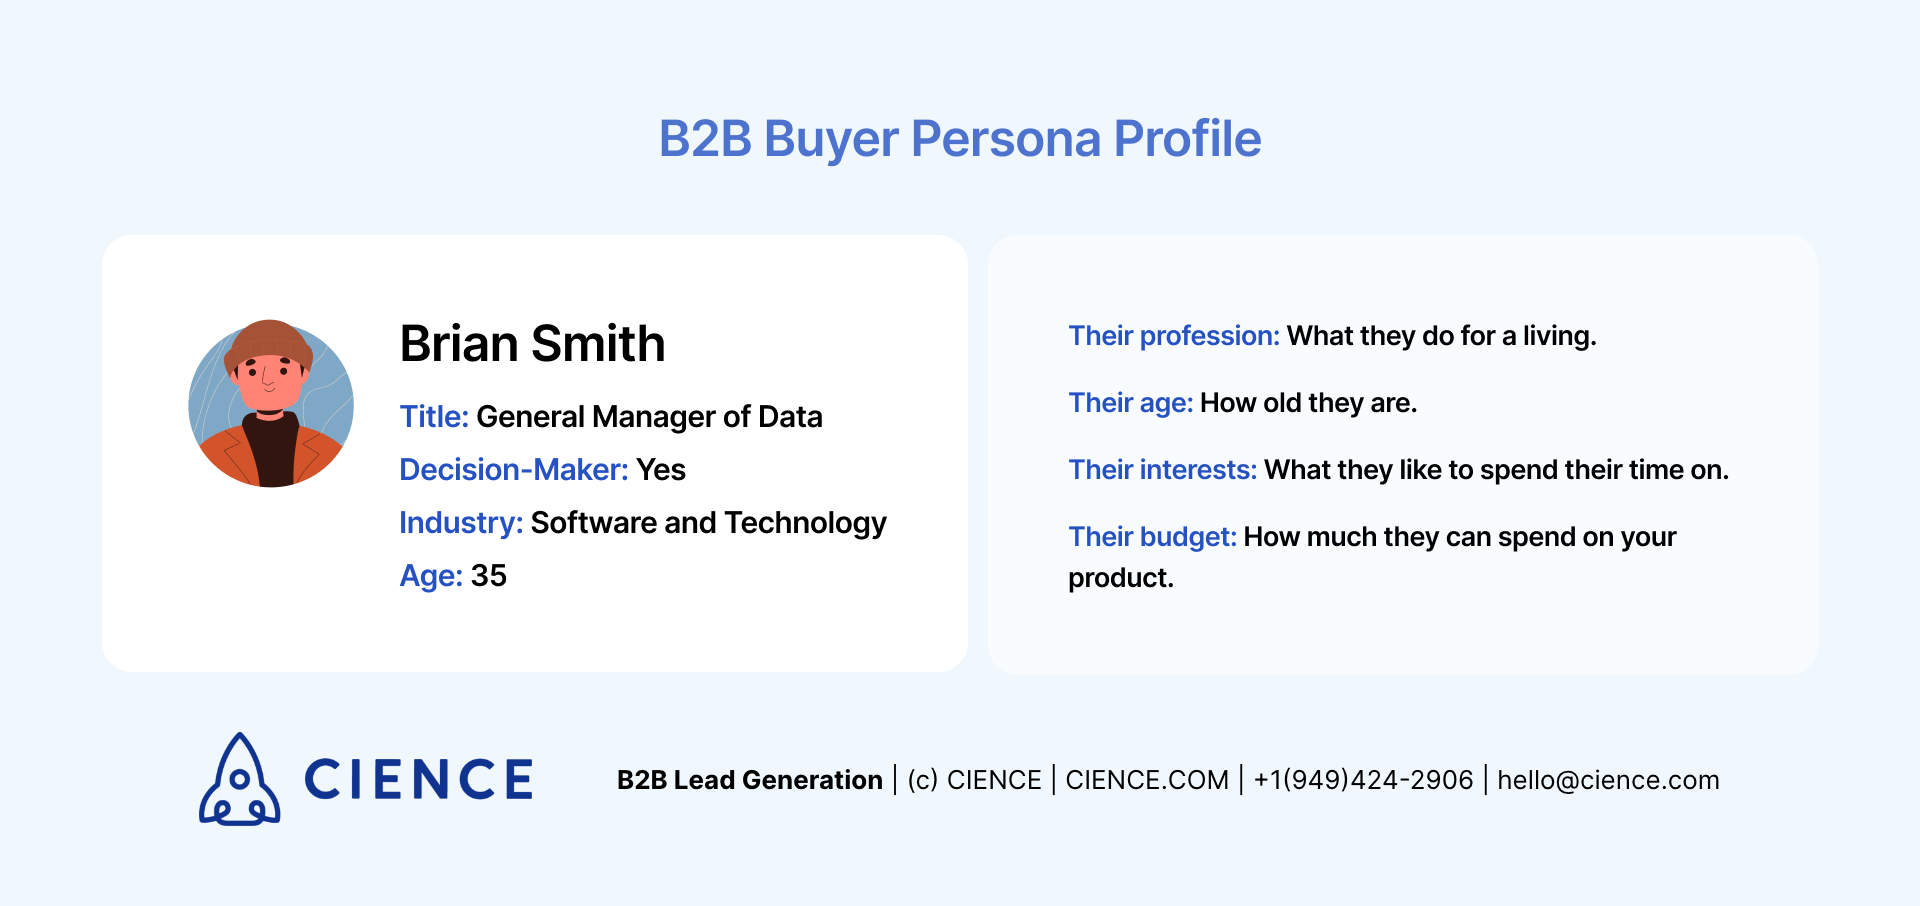 B2B Buyer Persona Profile